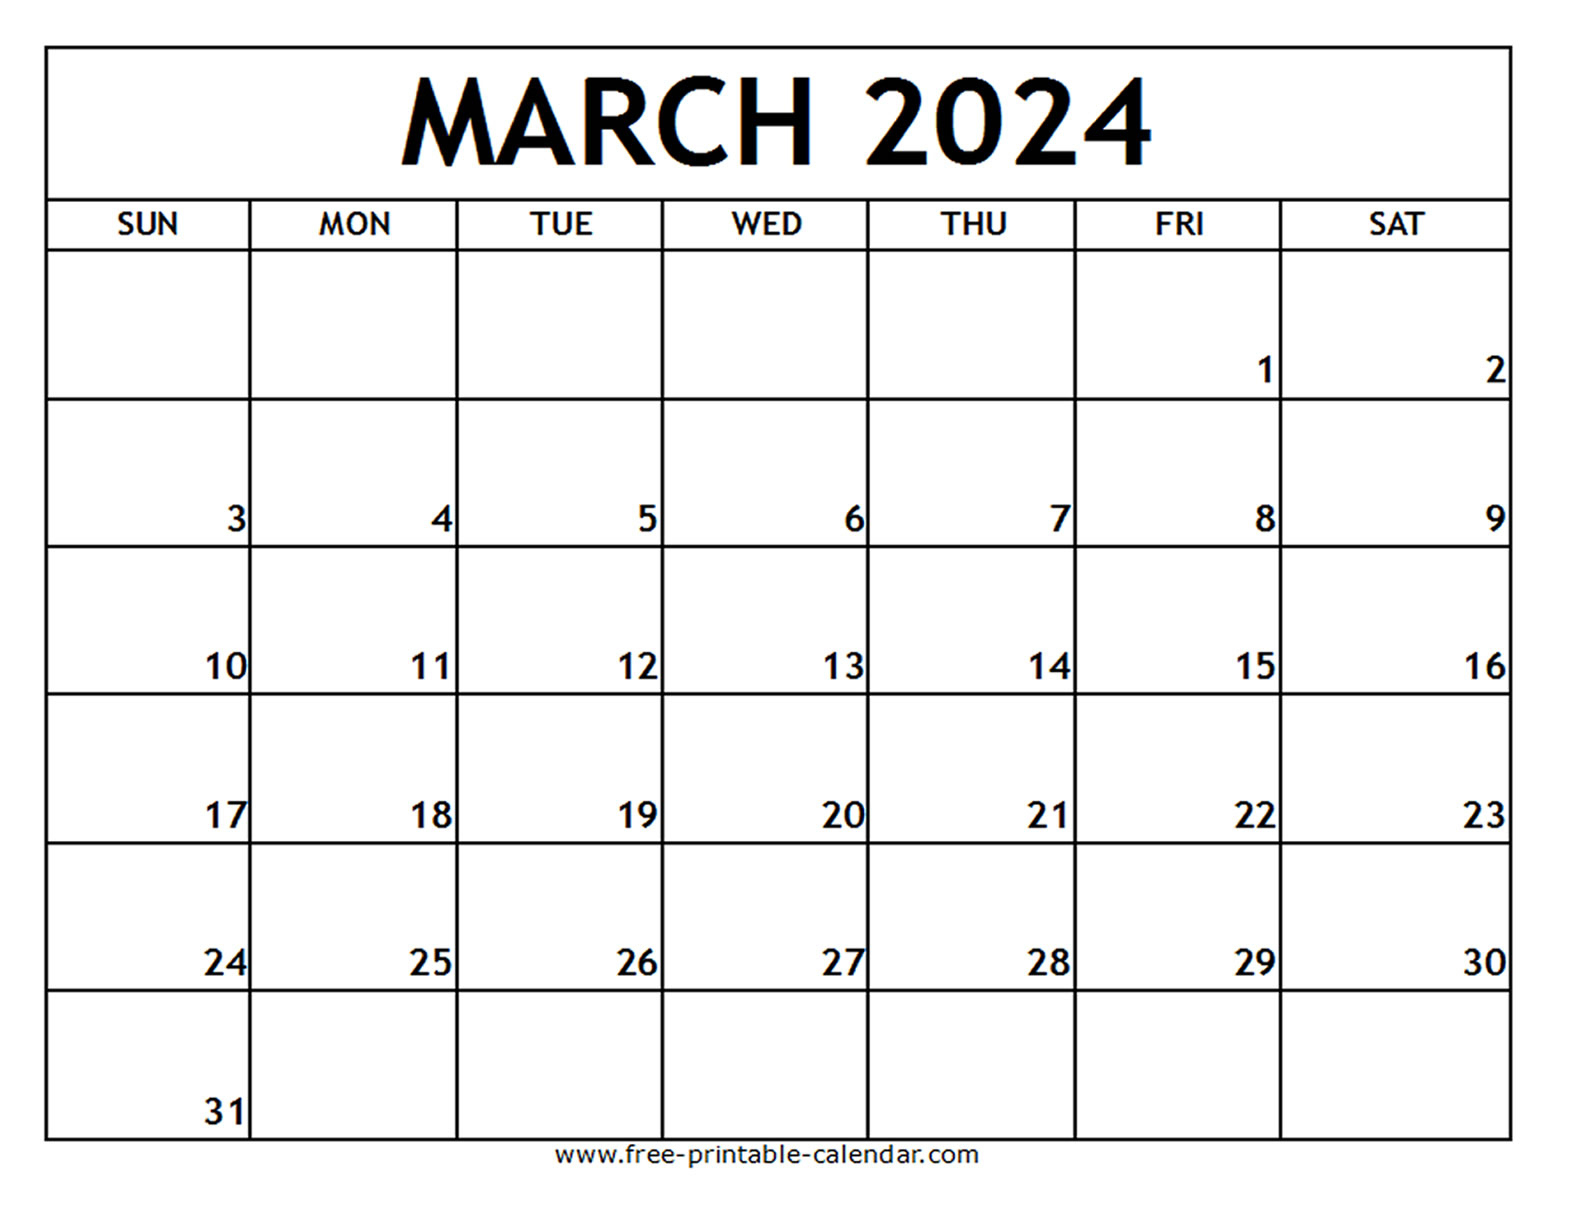 March 2024 Printable Calendar - Free-Printable-Calendar | Free Printable Calendar 2024 March